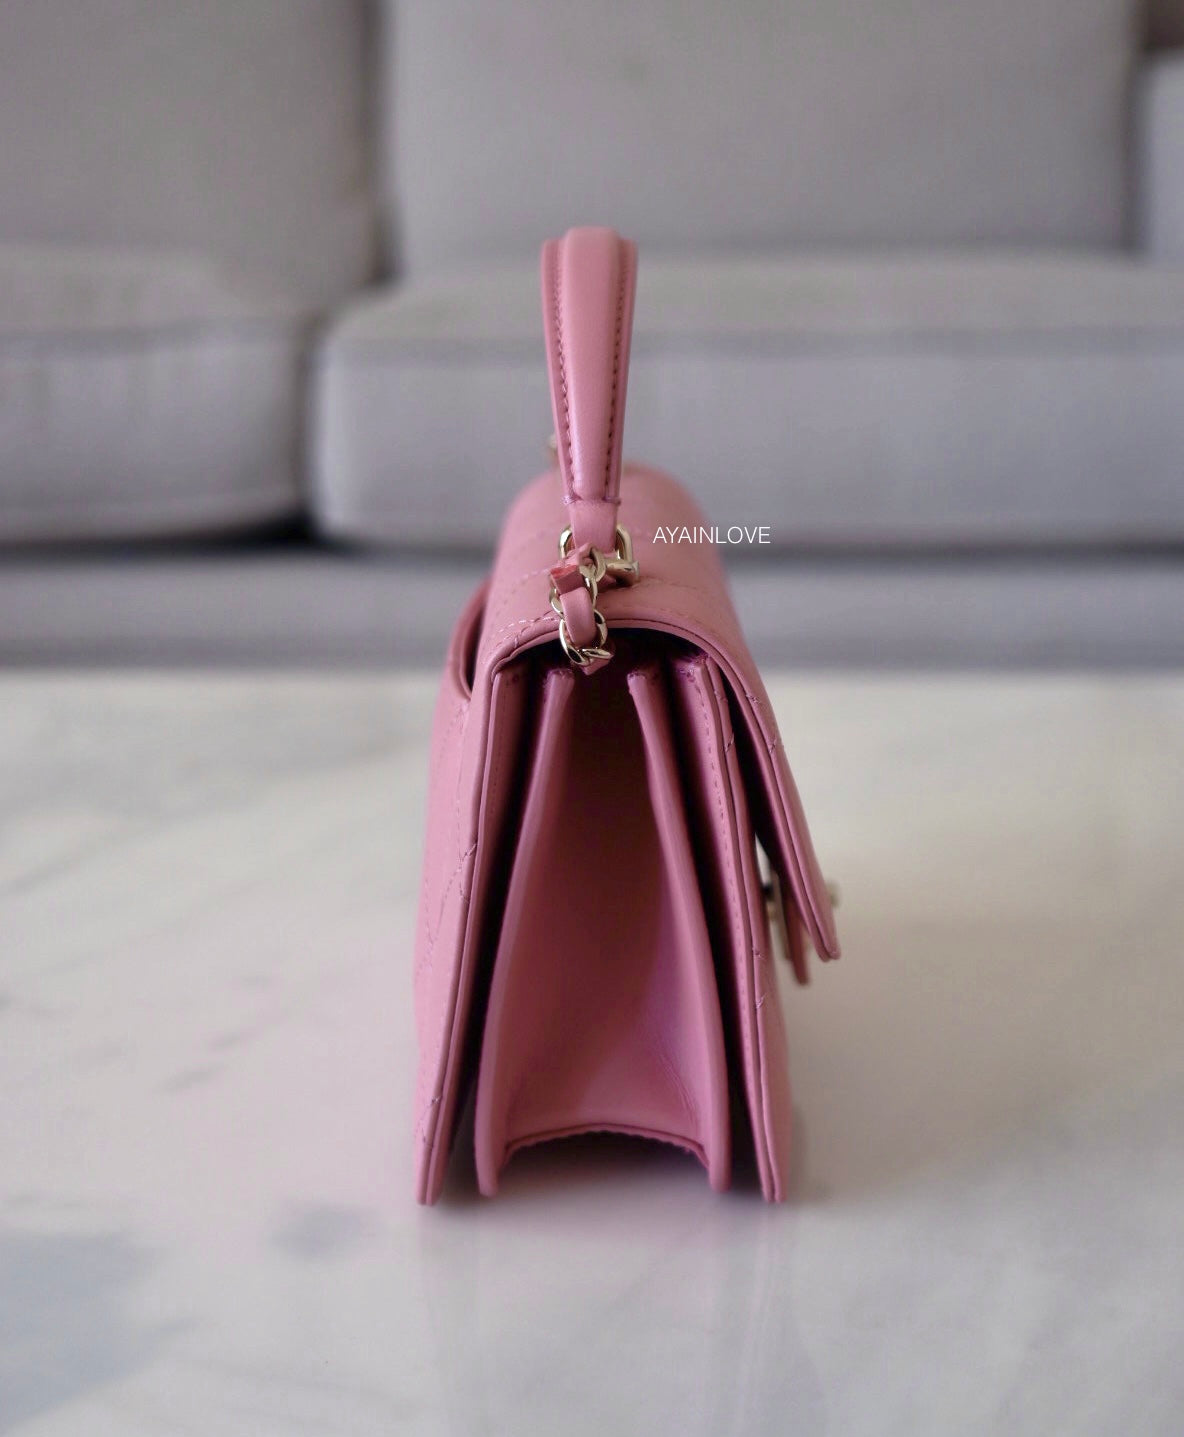 CHANEL 21B Dark Pink Calf Skin Coco Lady Small Top Handle Flap Bag Light  Gold Hardware